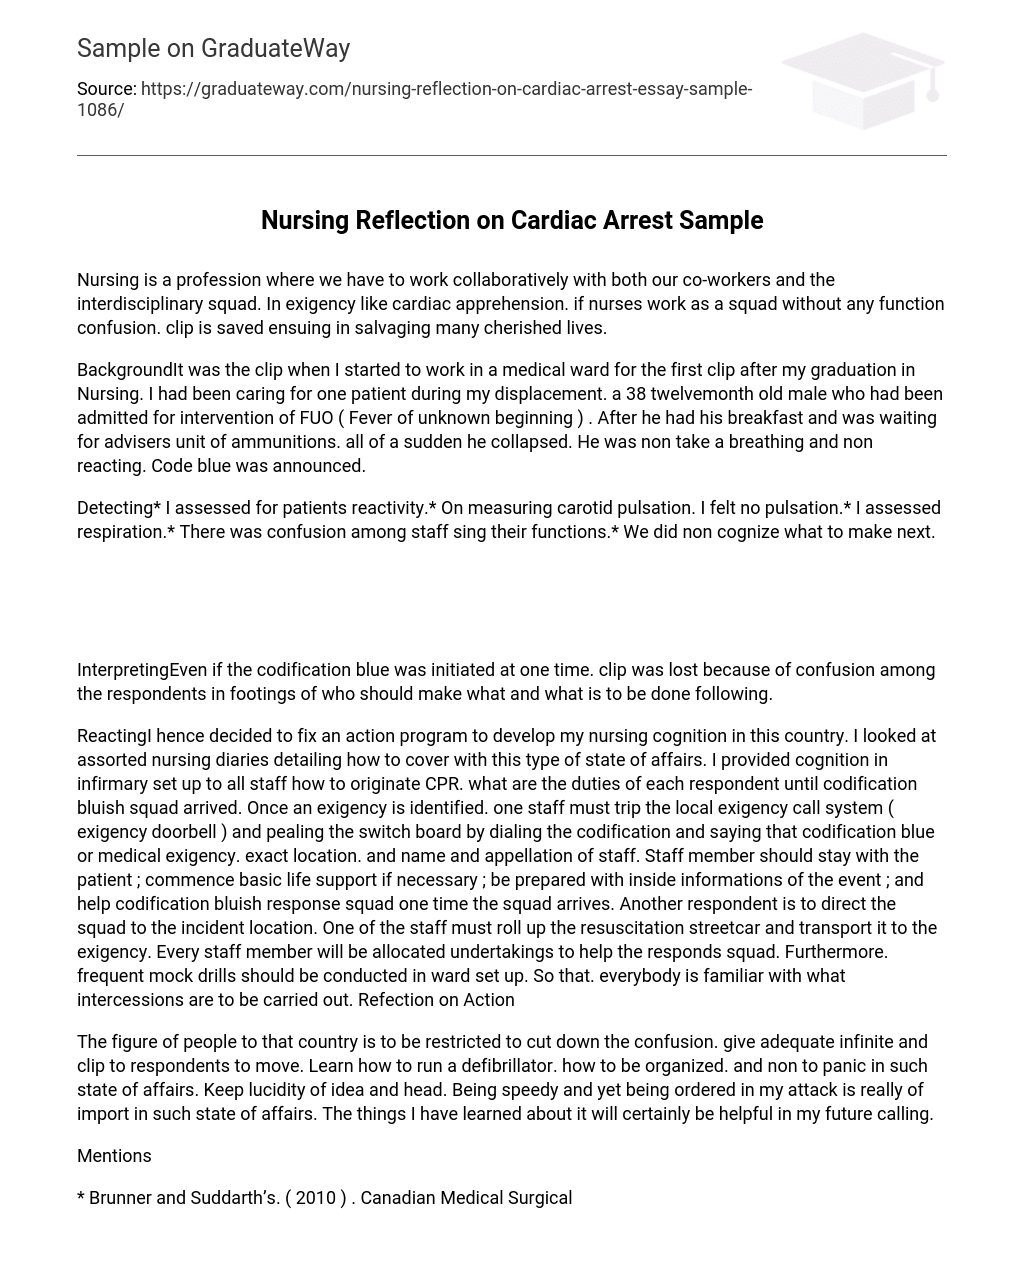 Nursing Reflection on Cardiac Arrest Sample